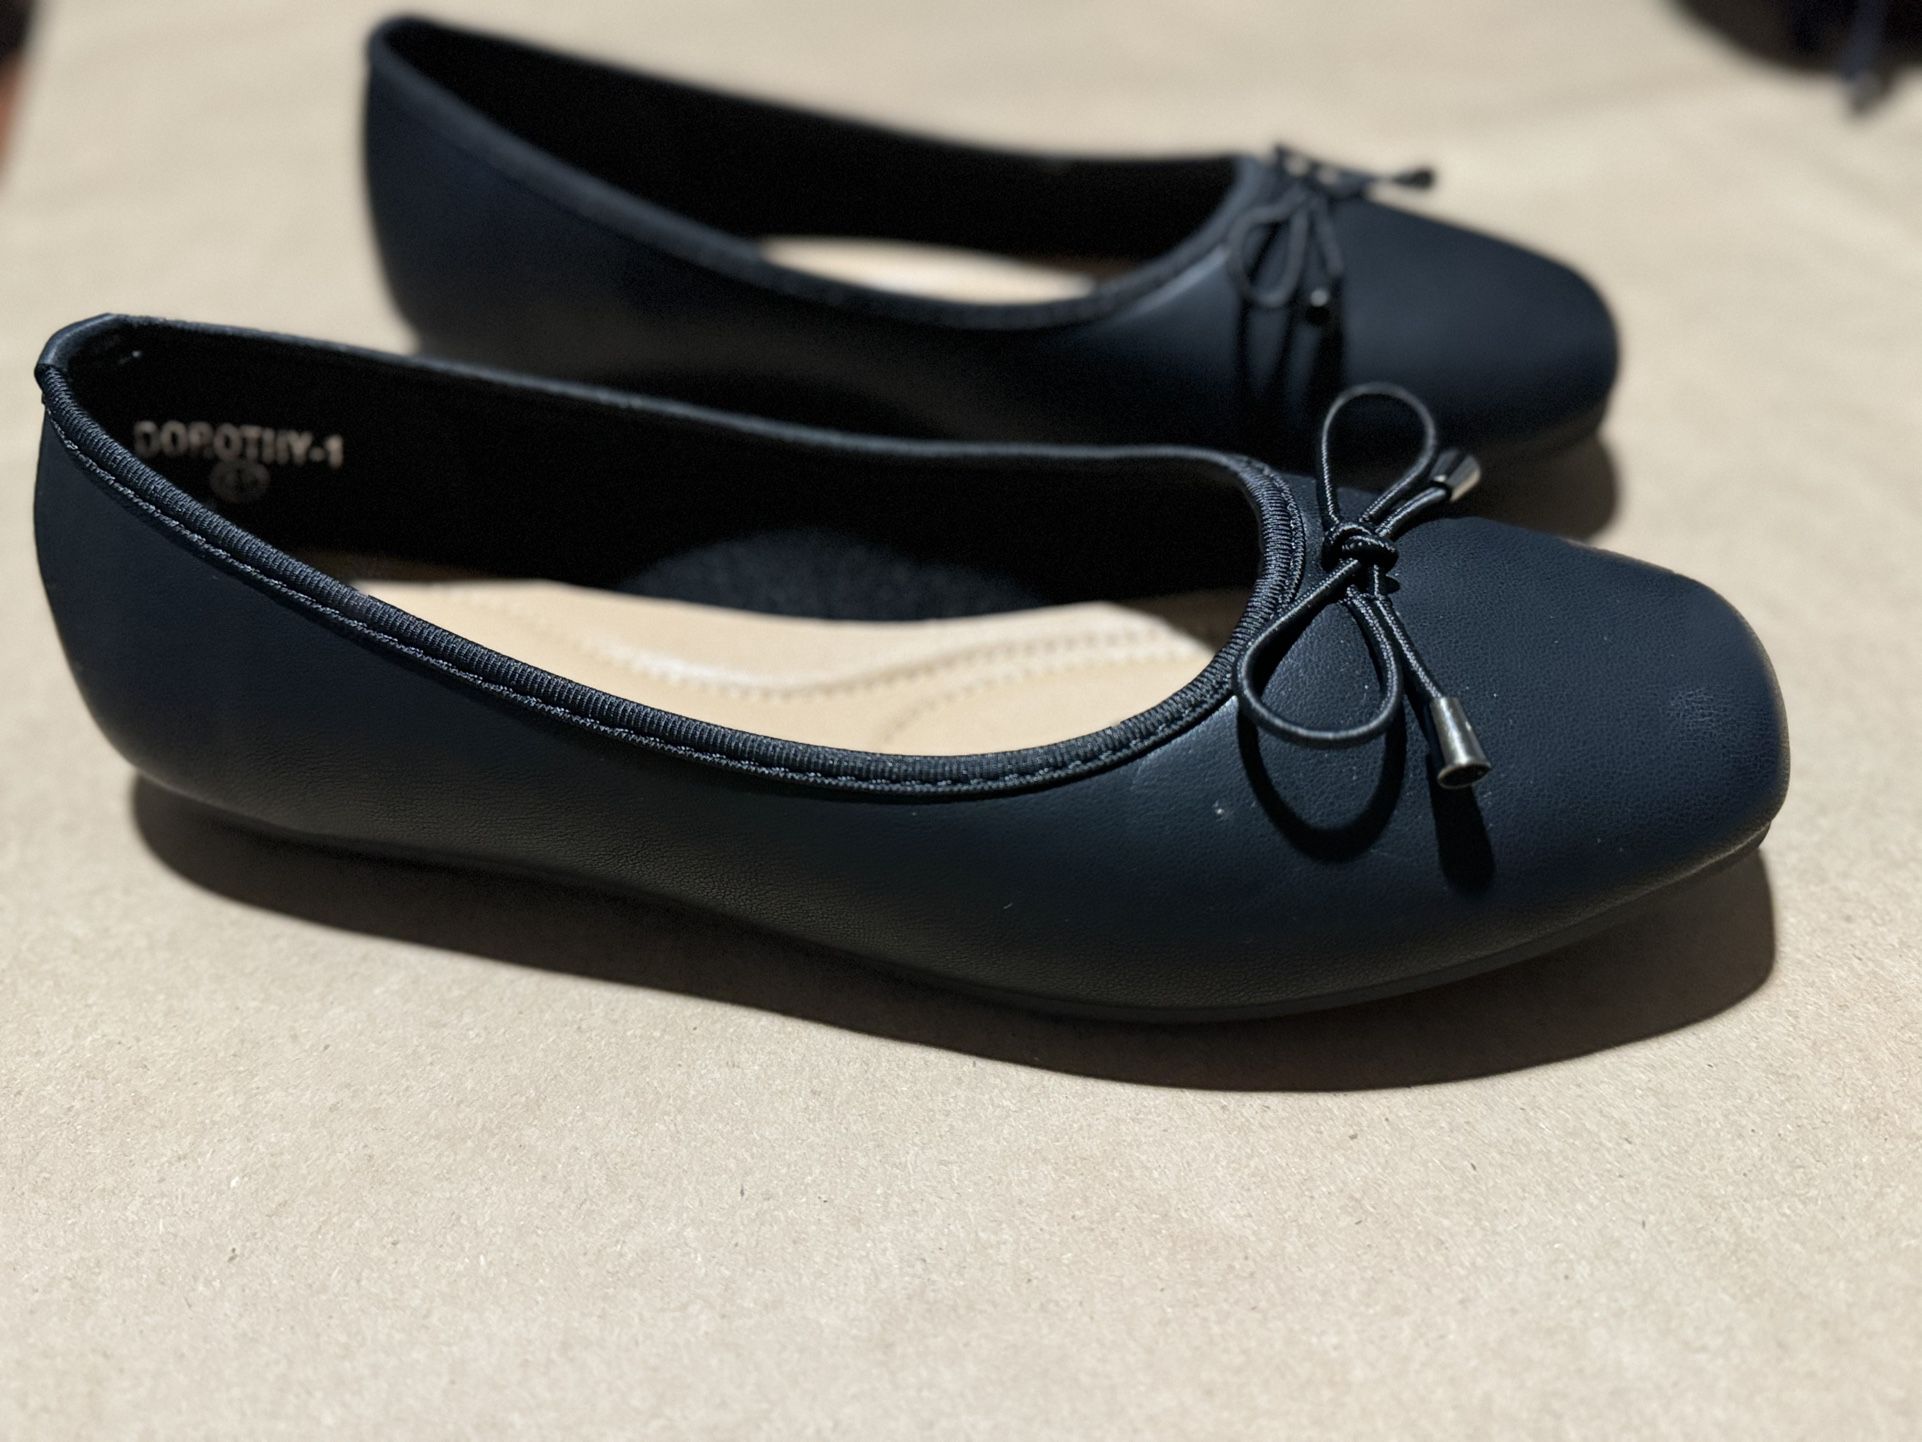 Top Moda Black flat ballerina shoes 8.5 New